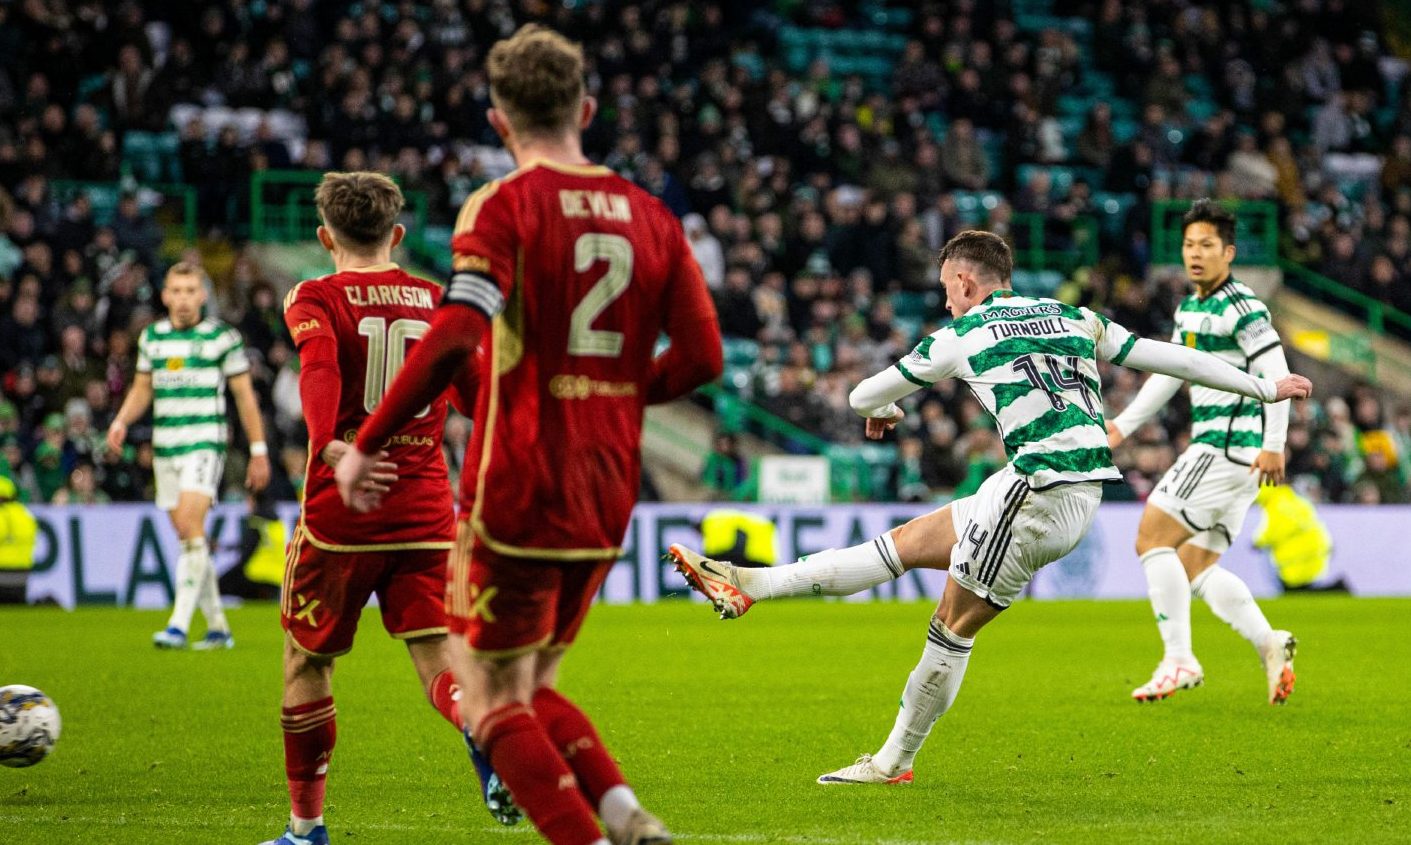 Celtic's David Turnbull scoring a goal against Aberdeen